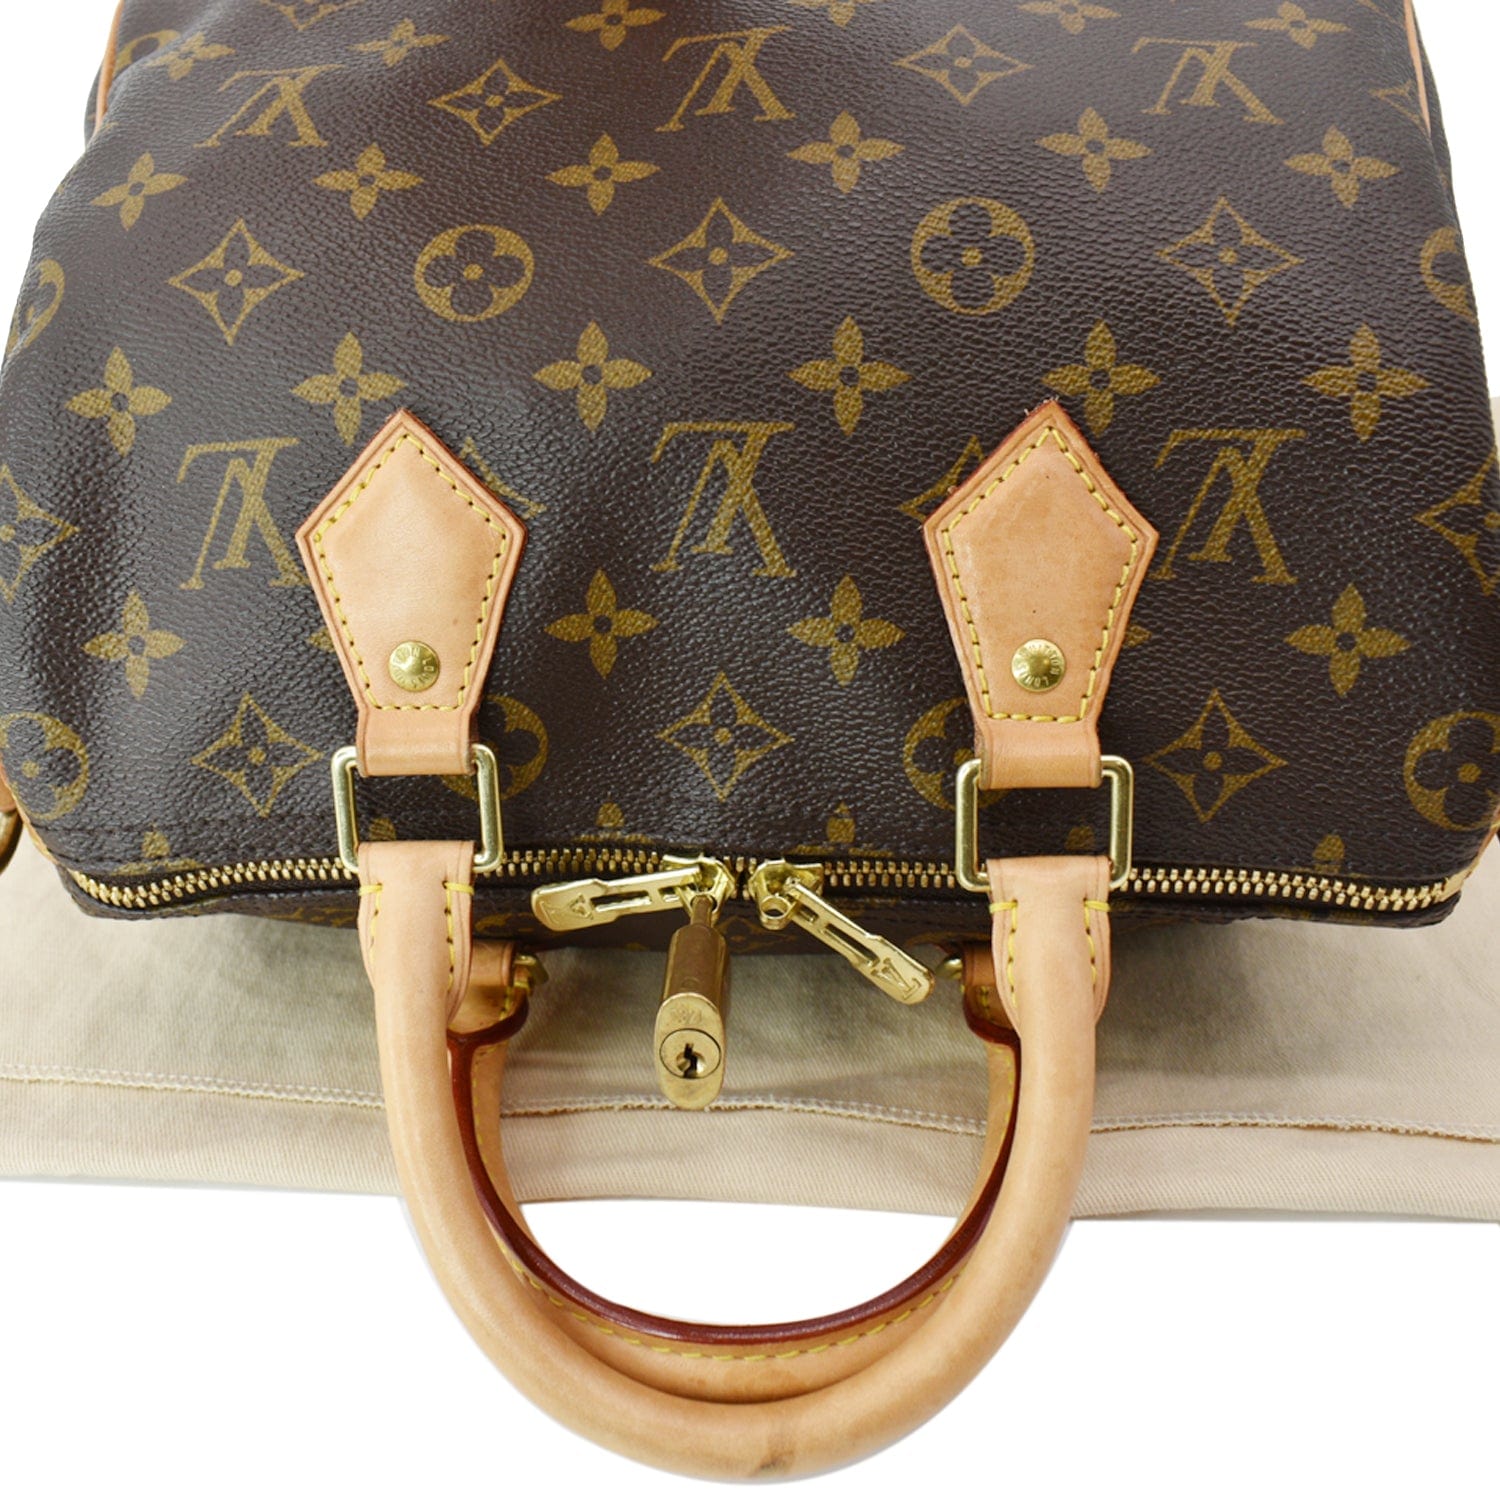 Louis Vuitton Speedy Shoulder bag 382168